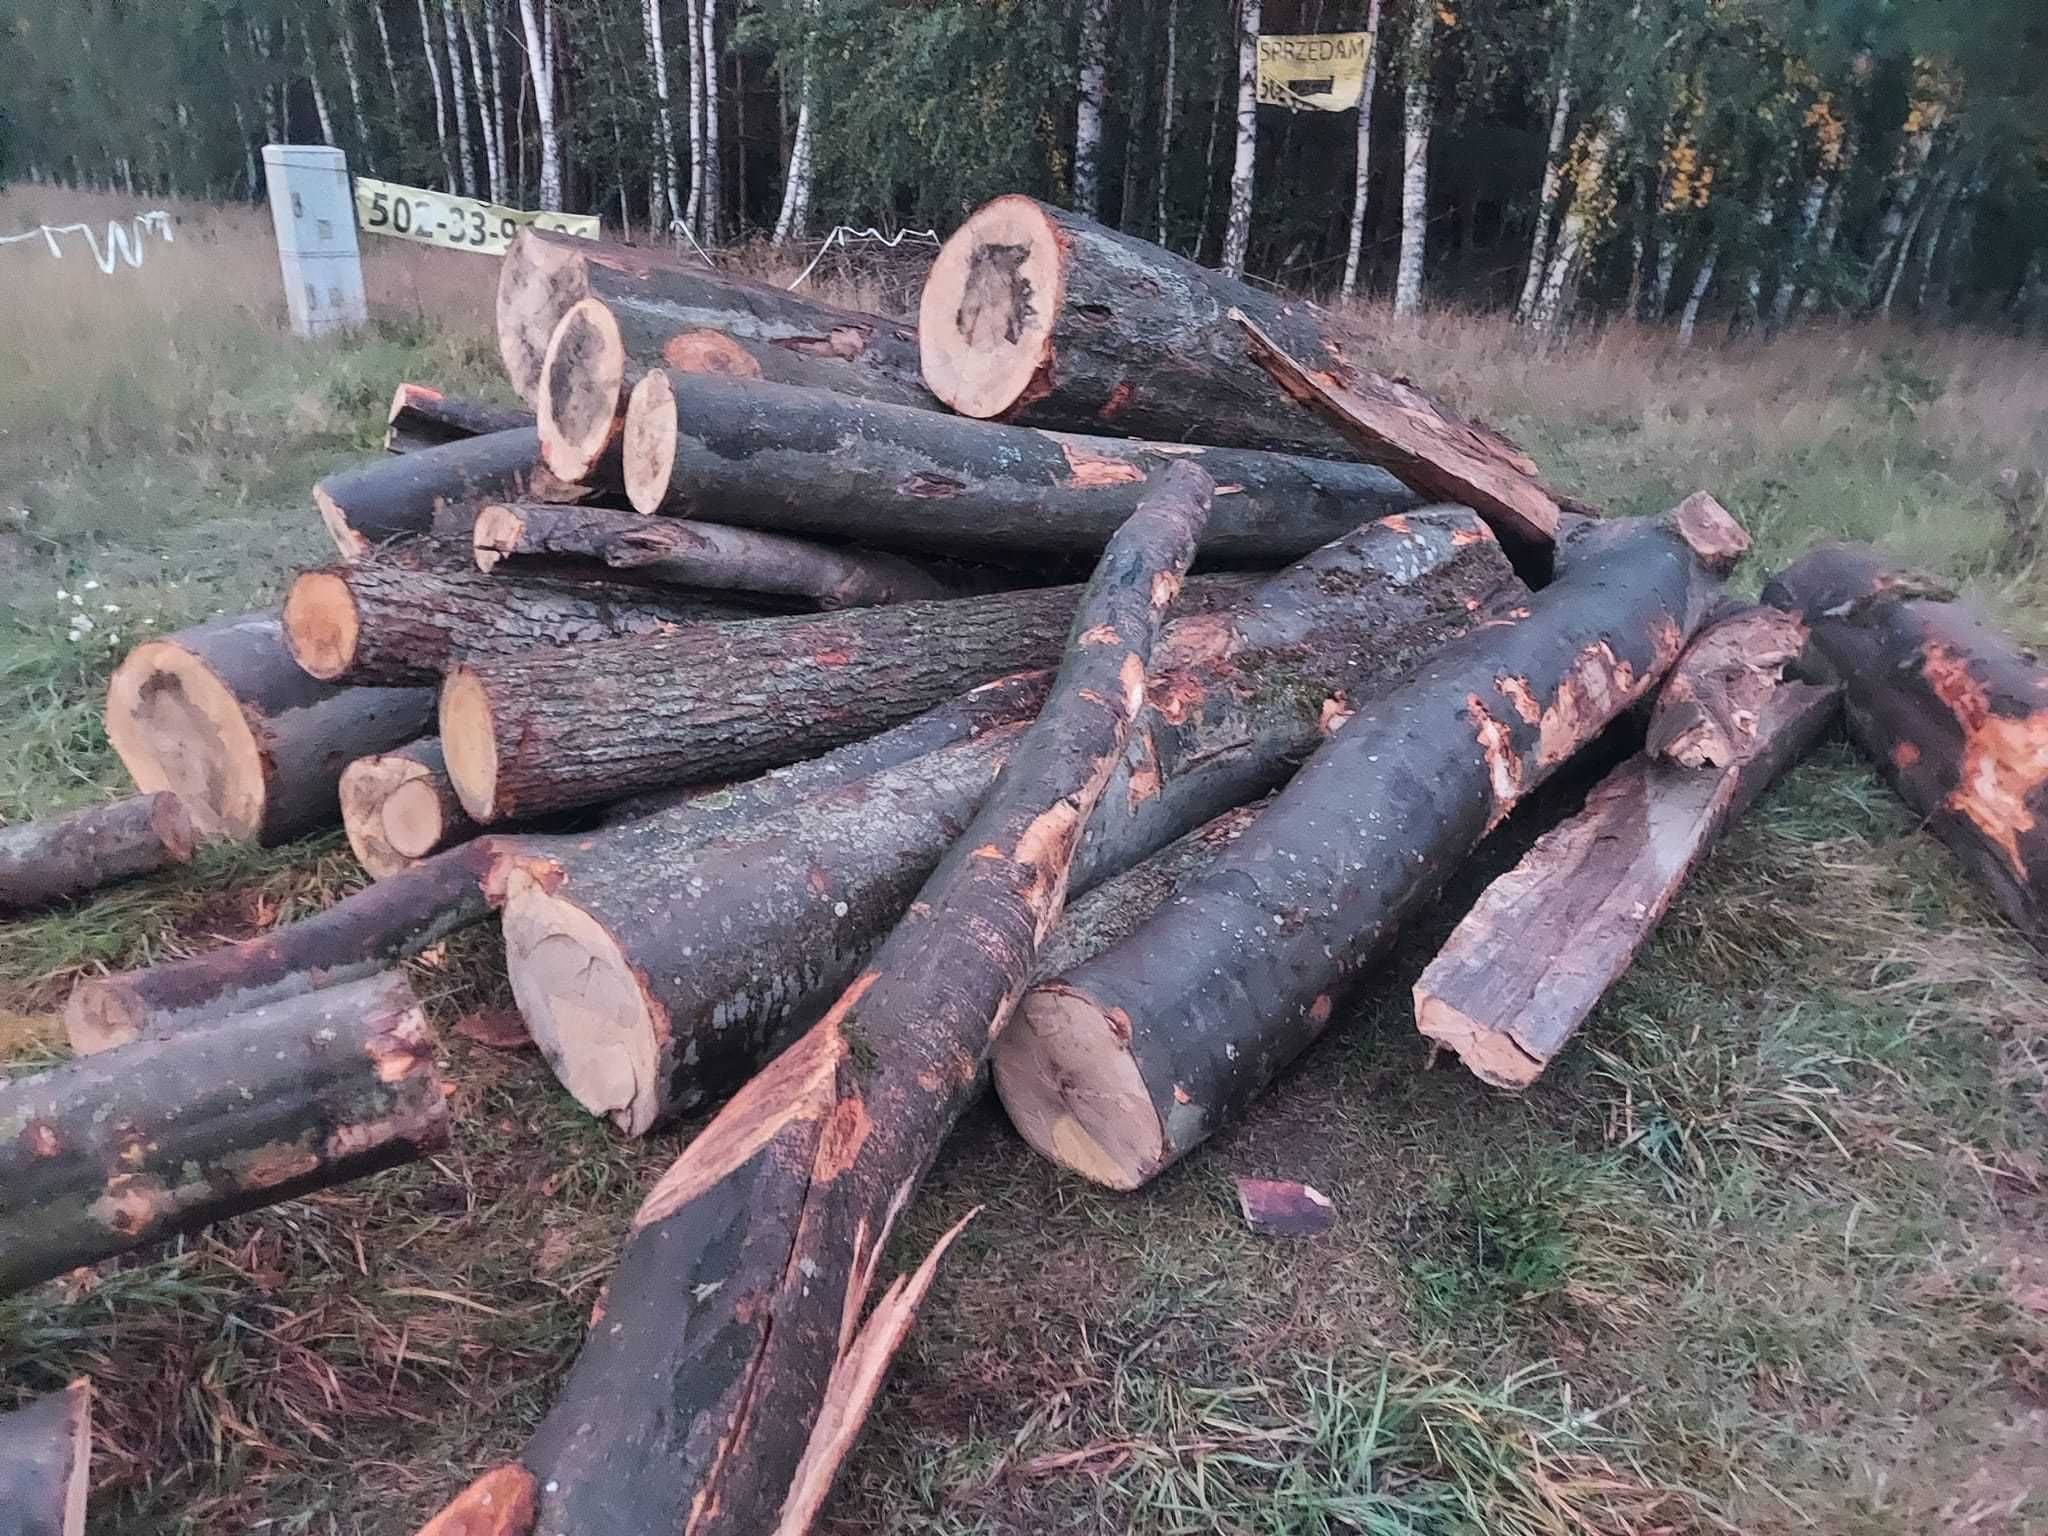 Drewno kominkowe twarde - uczciwe metry z lasu